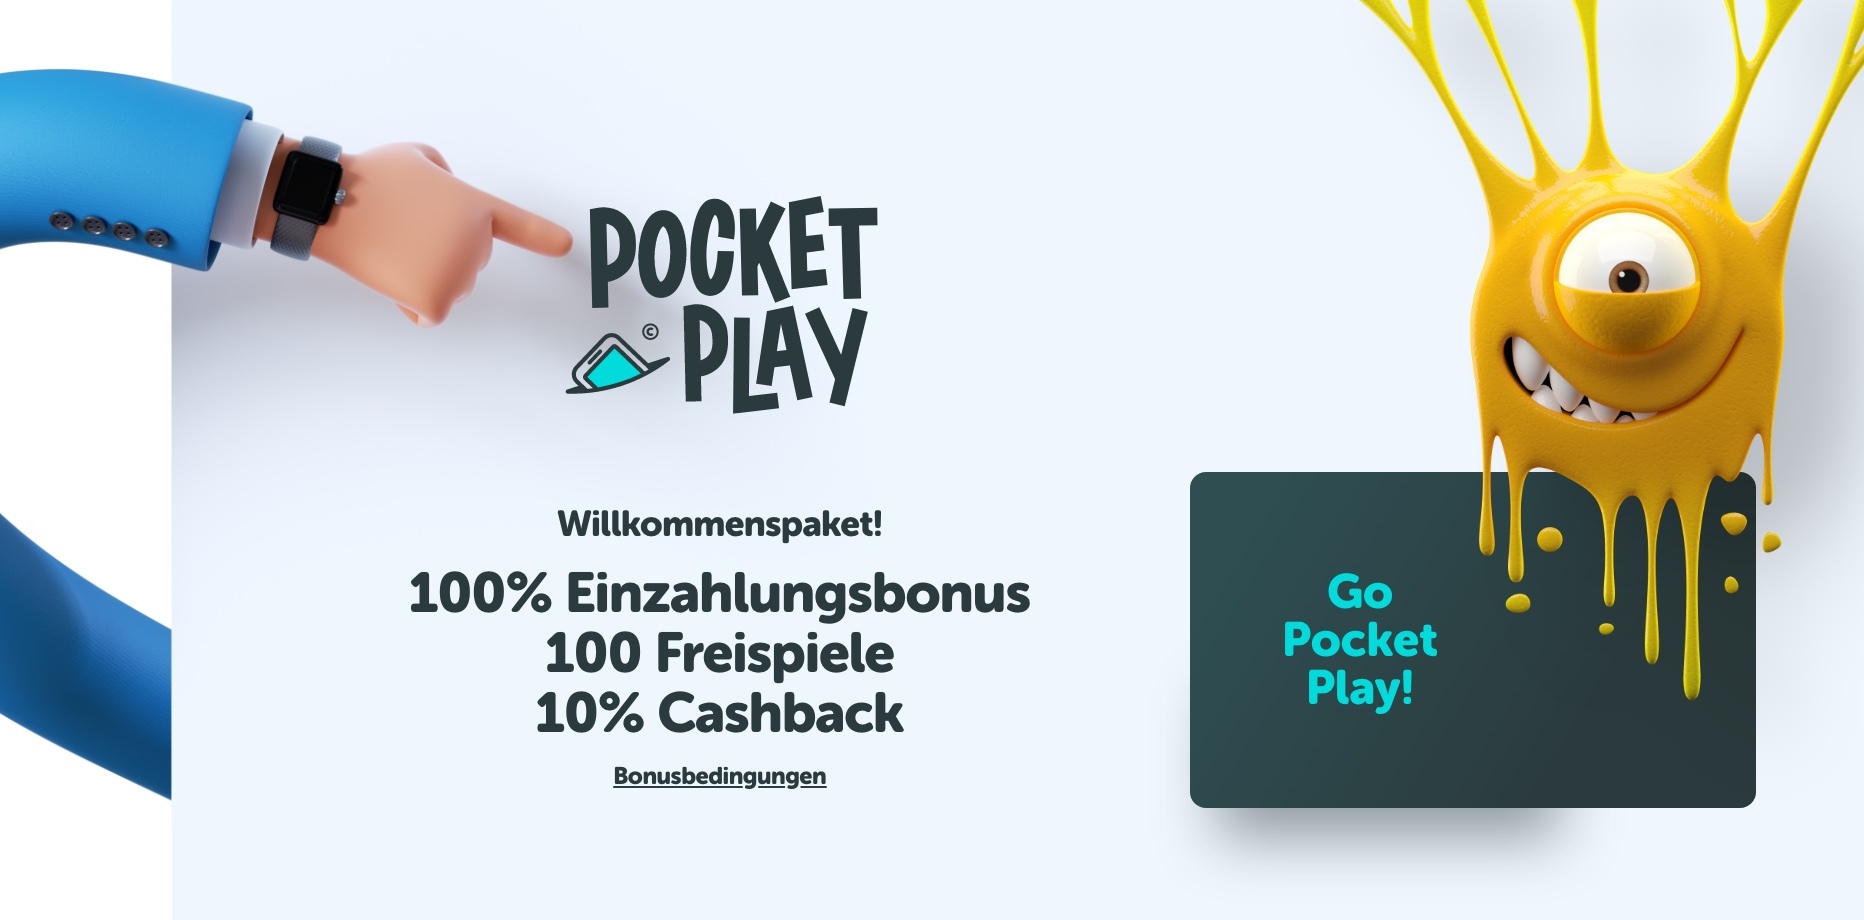 Pocket Play Casino Bonus - 100 € + 100 Freispiele + 10% Cashback